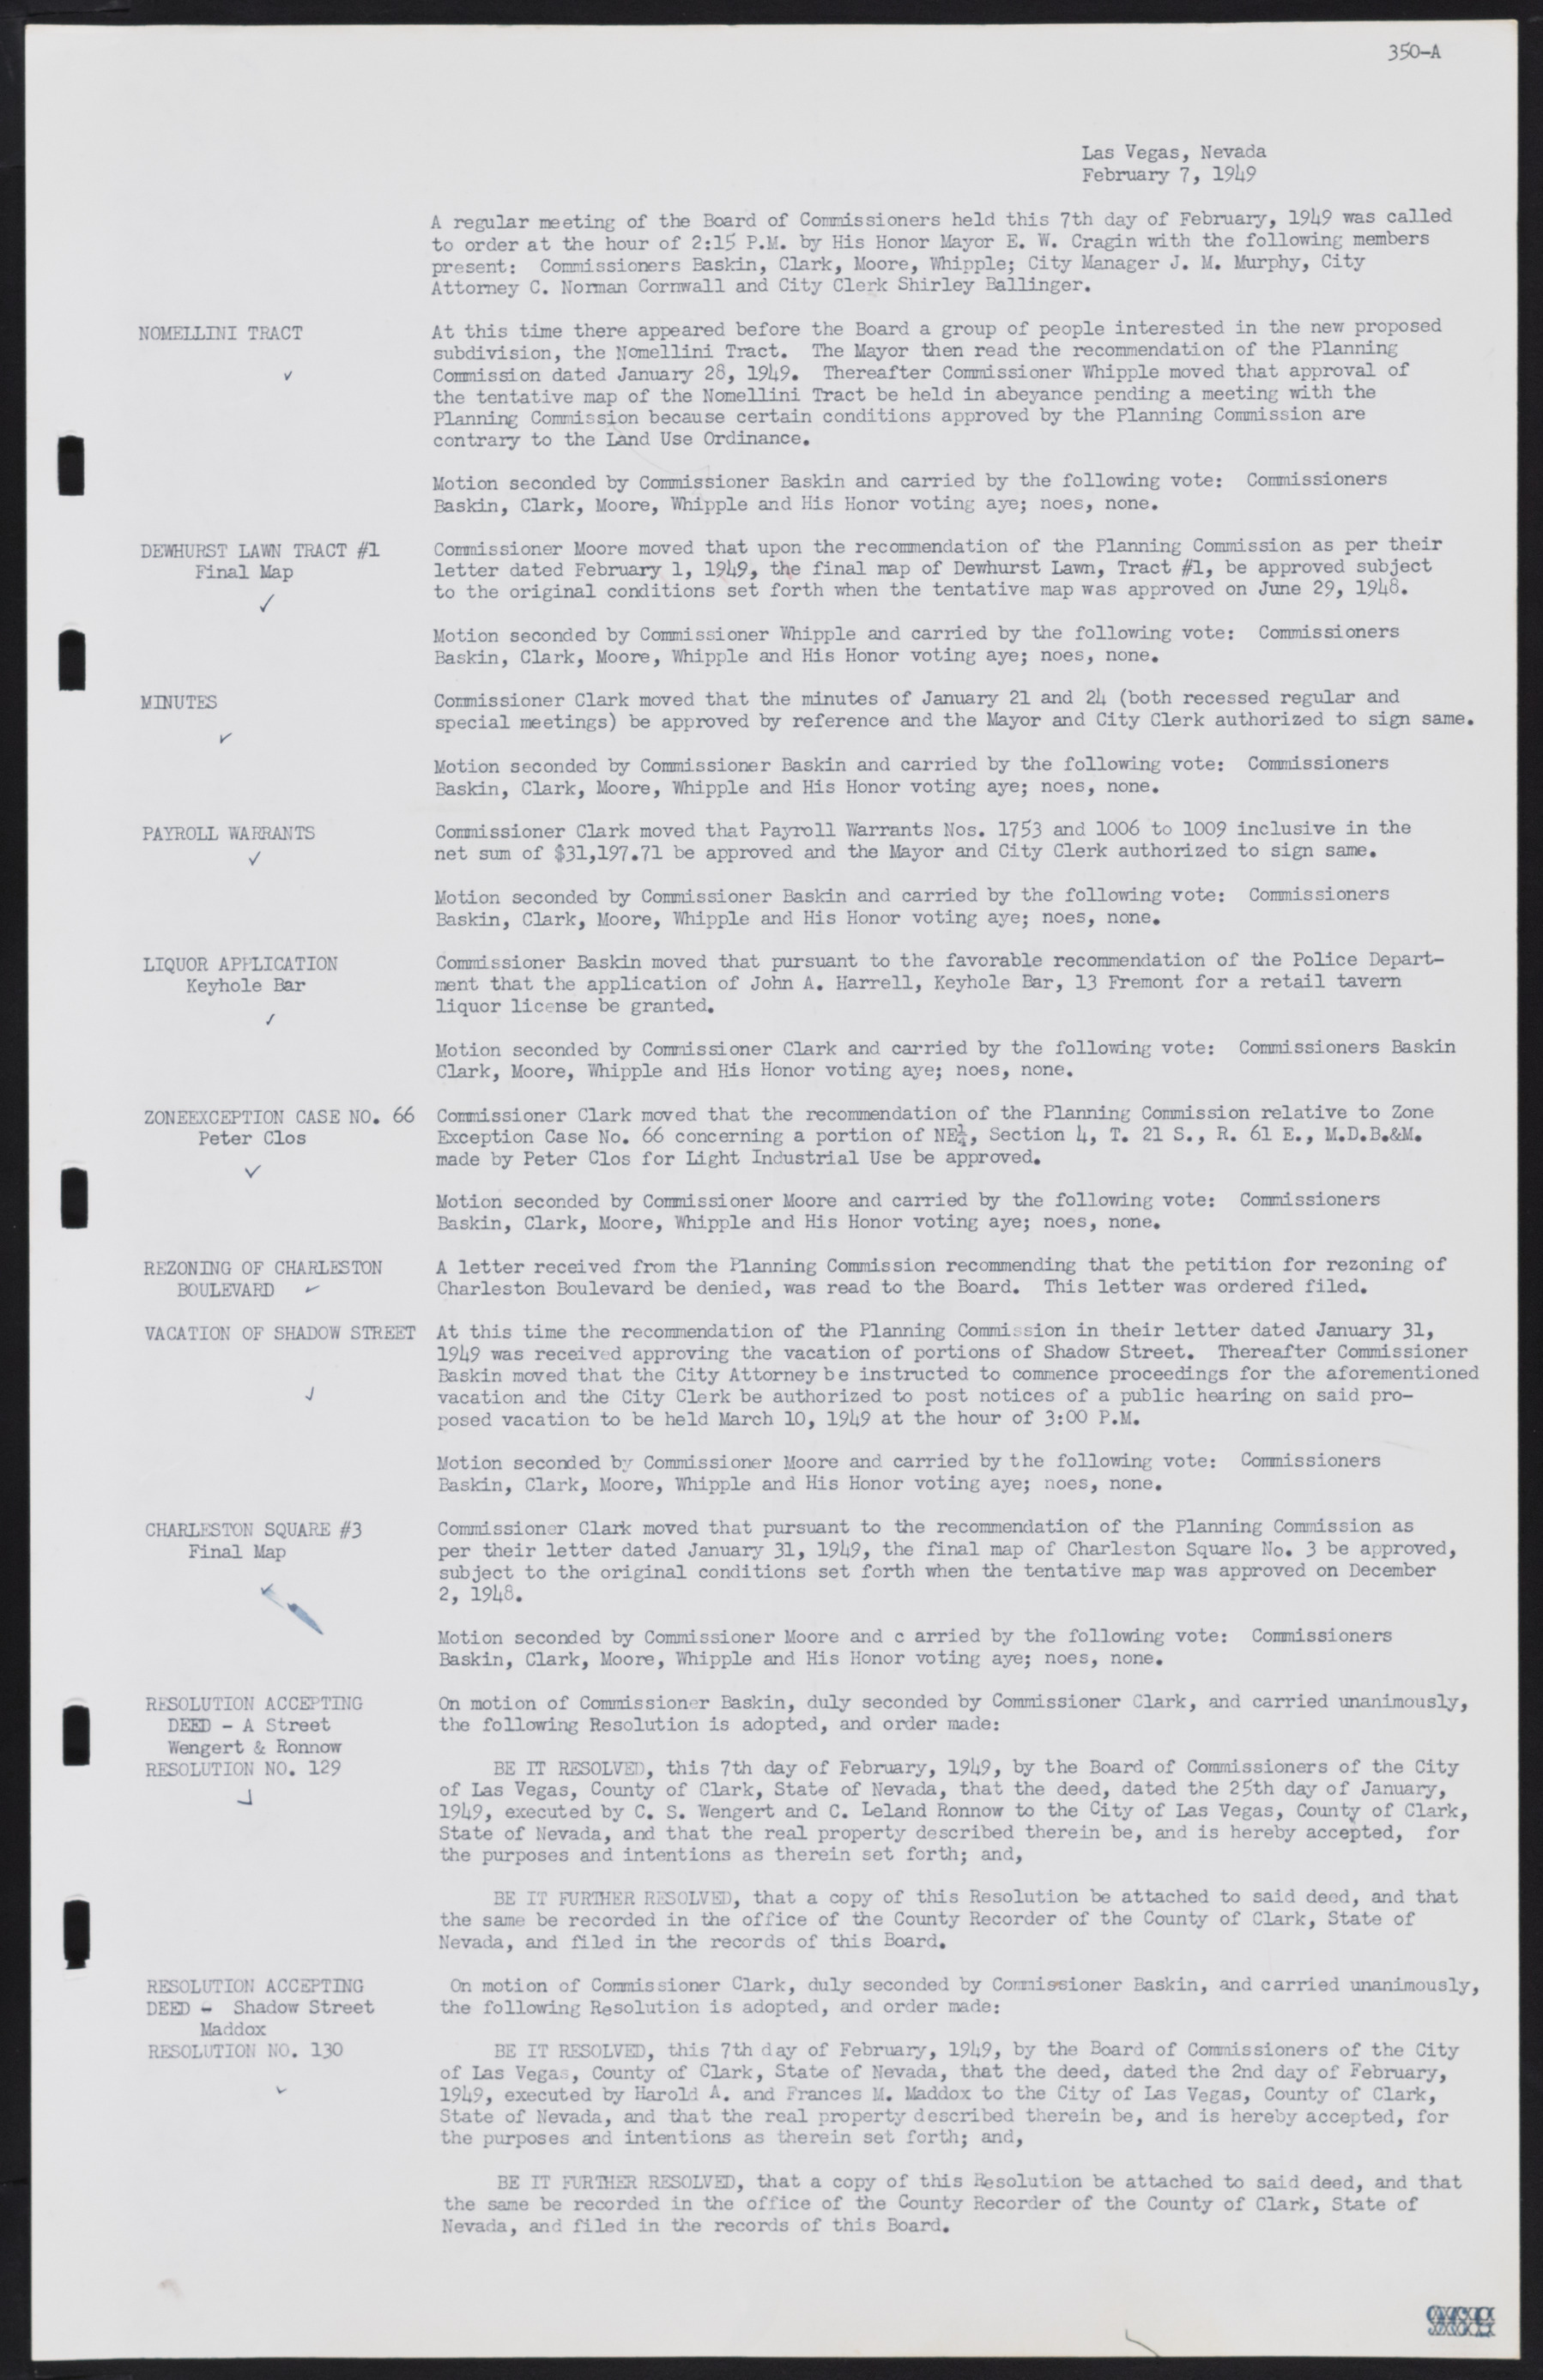 Las Vegas City Commission Minutes, January 7, 1947 to October 26, 1949, lvc000006-377